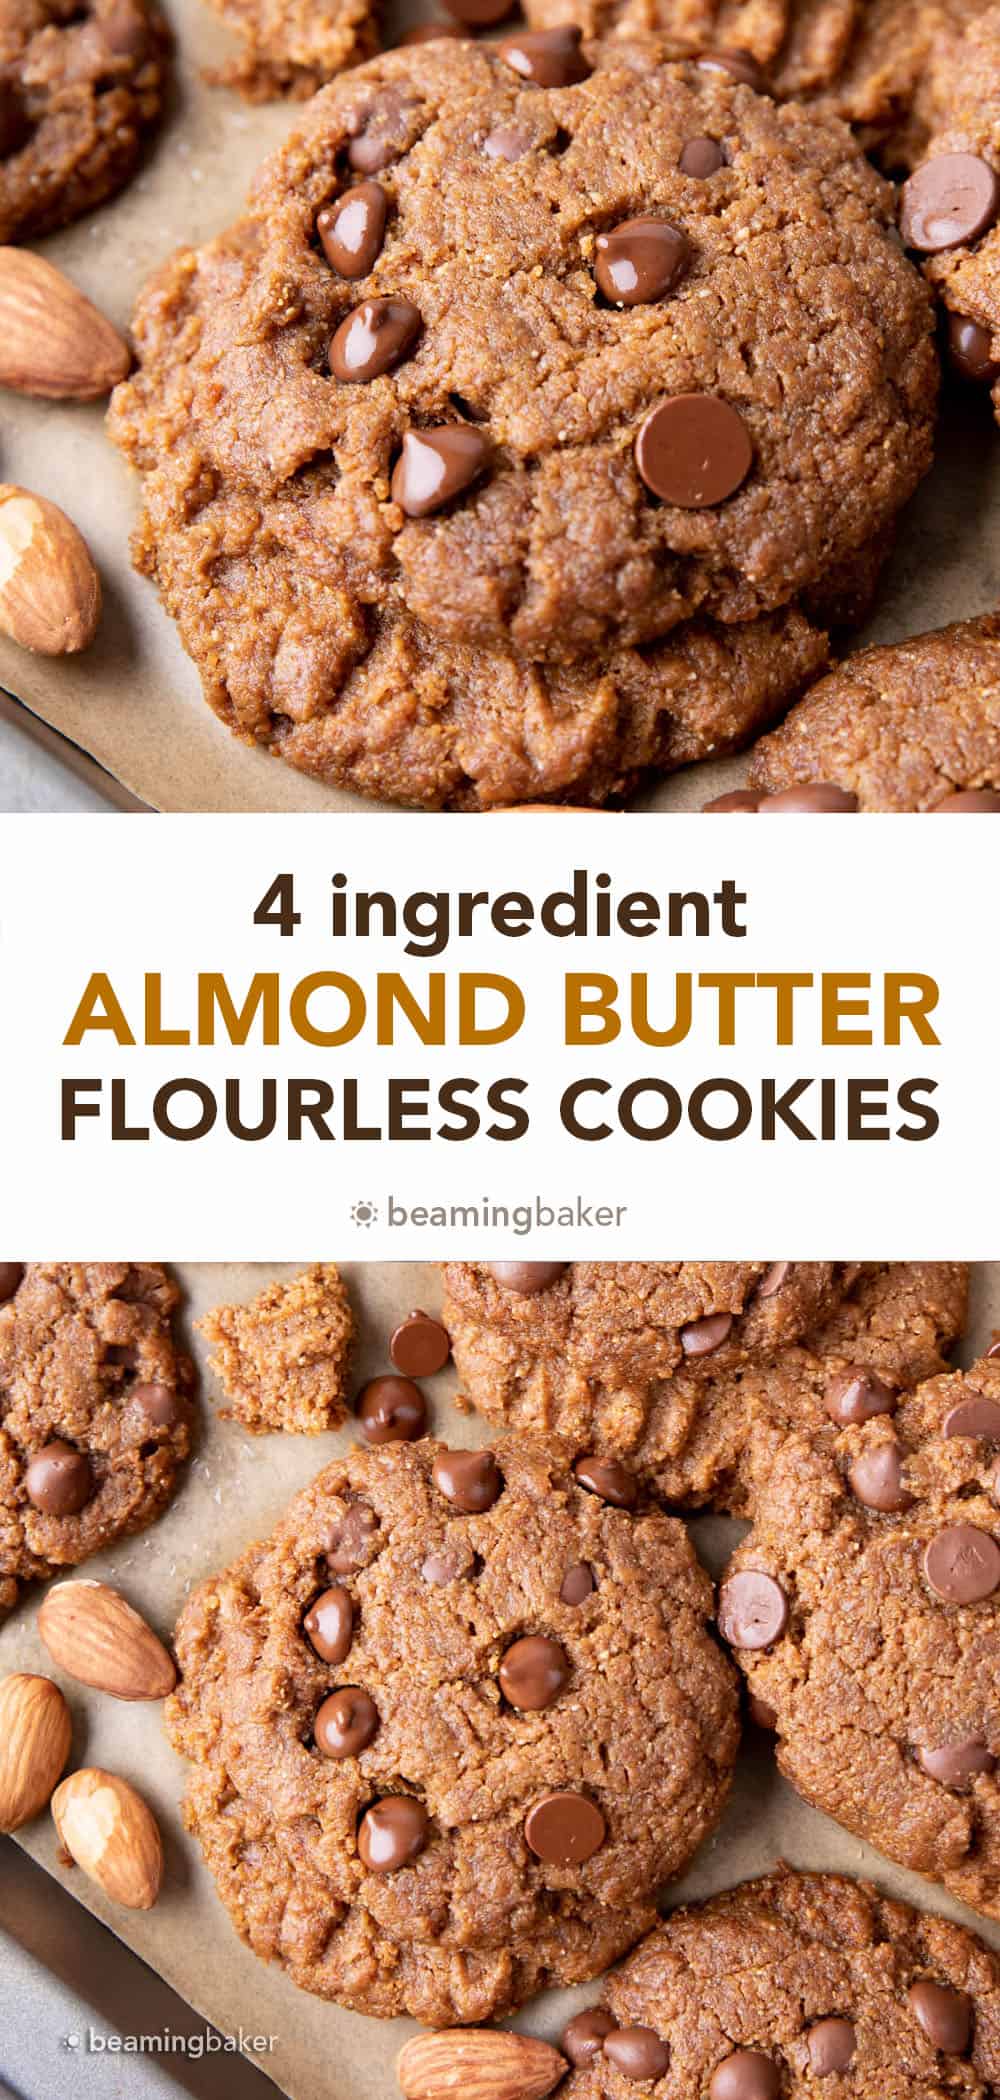 4 Ingredient Flourless Almond Butter Cookies (Gluten Free): unbelievably soft ‘n chewy flourless almond butter cookies made with just 4 ingredients! The best gluten free almond butter cookies—easy to make, delicious, simple ingredients. #Flourless #GlutenFree #Cookies #AlmondButter | Recipe at BeamingBaker.com